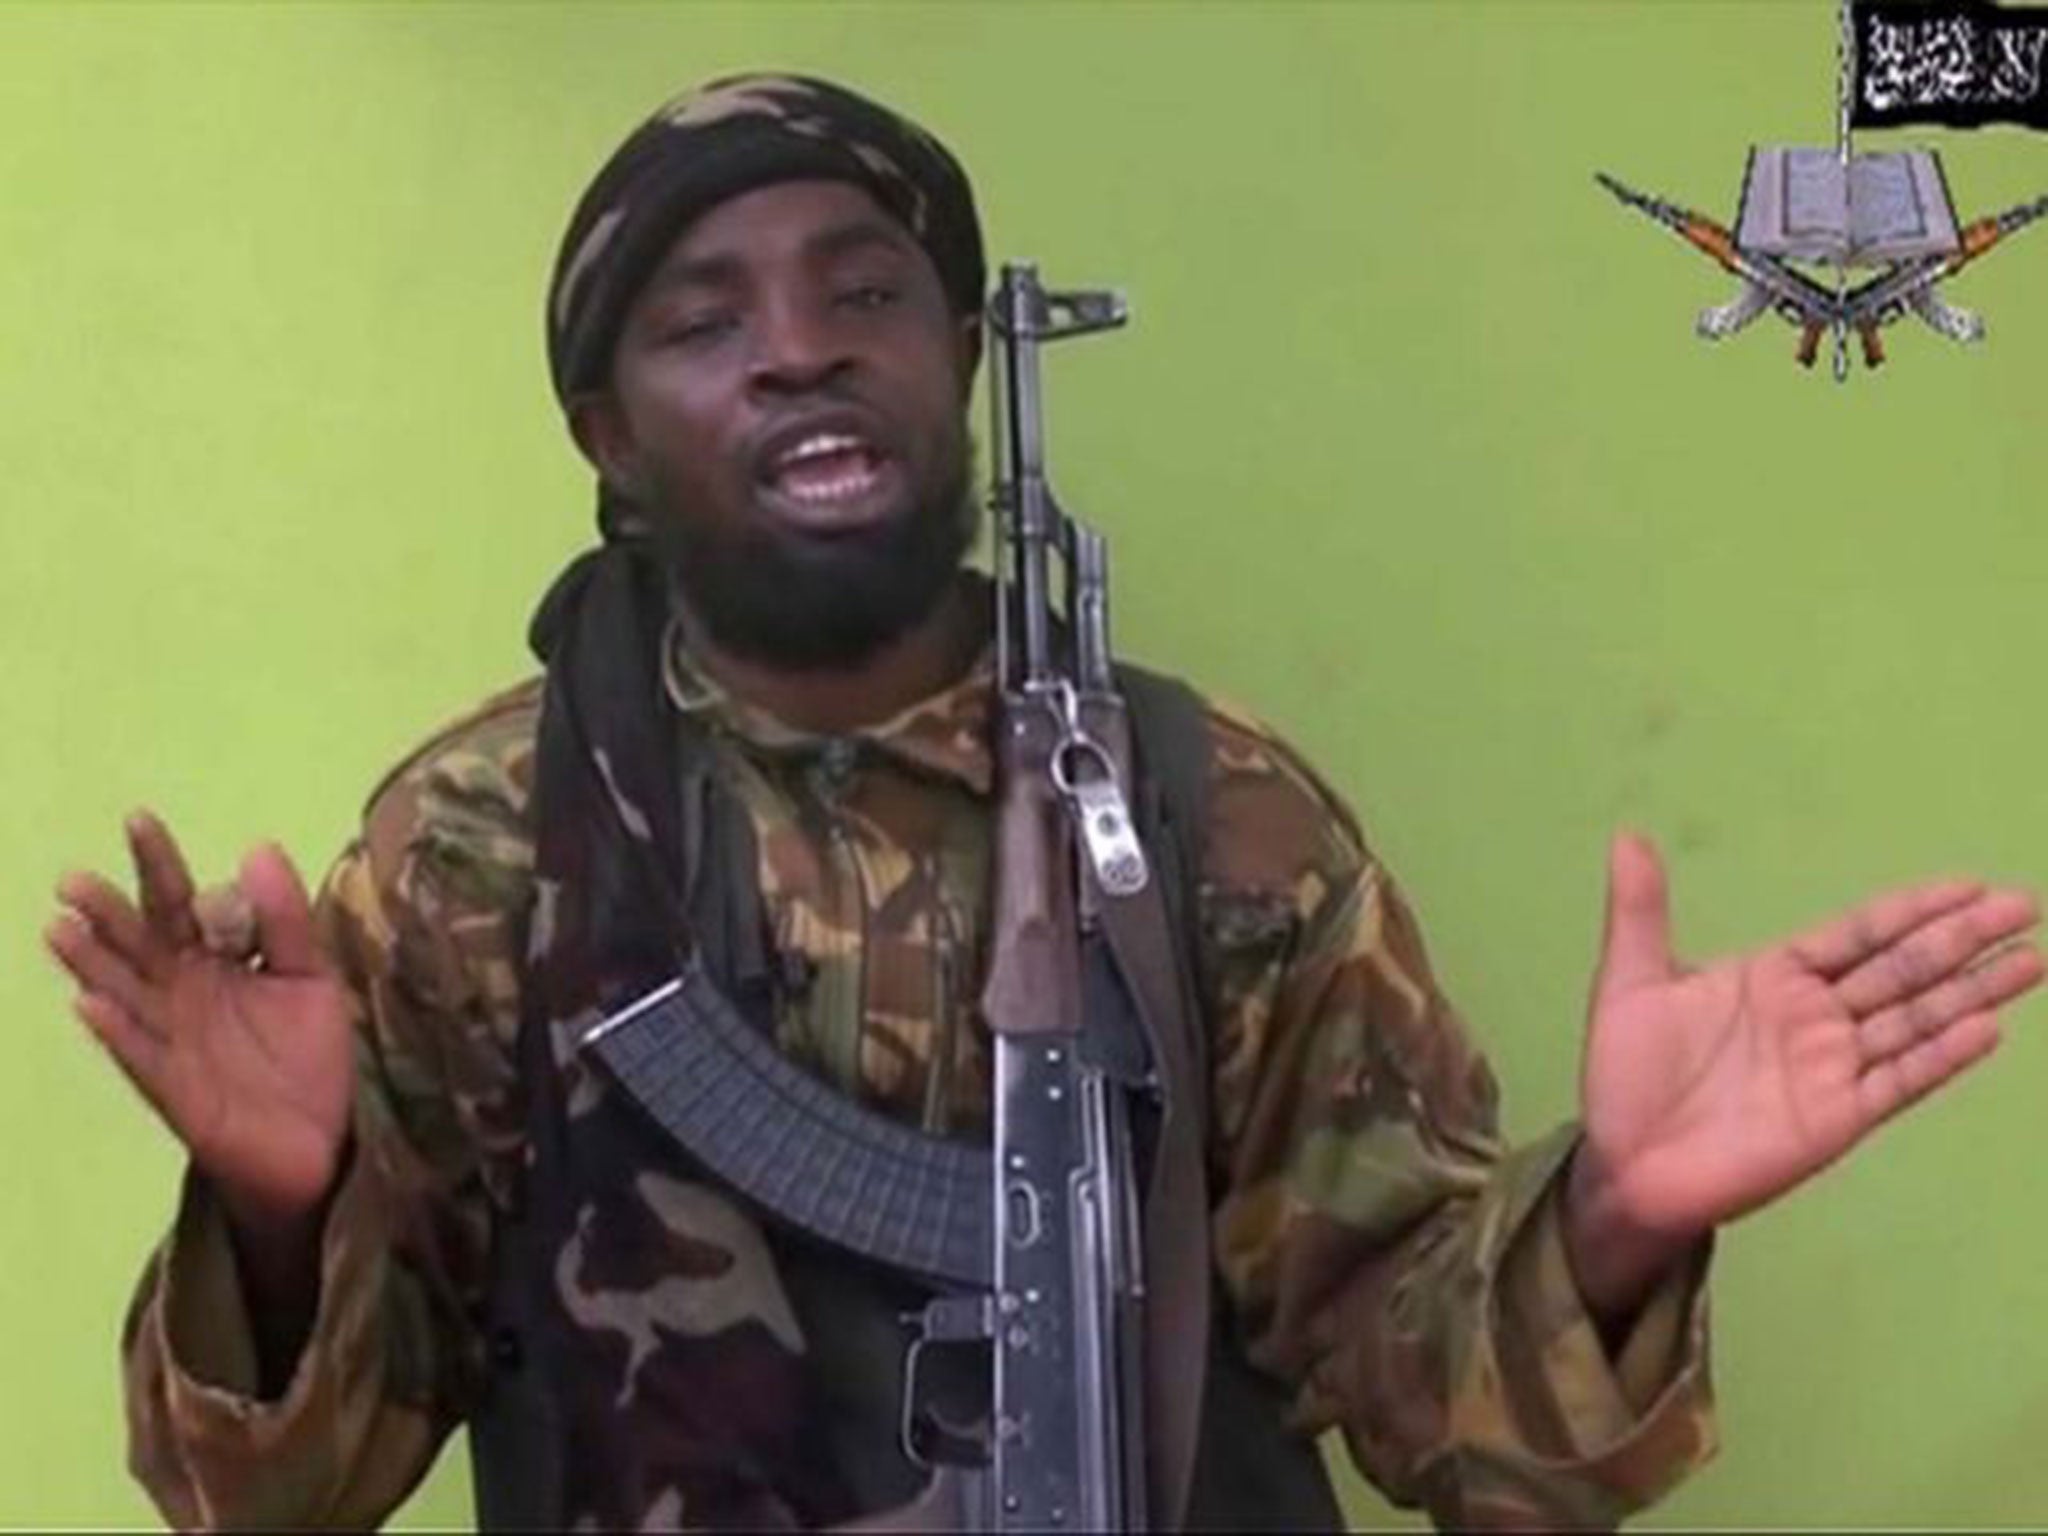 Abubakar Shekau, Boko Haram’s leader, presents just one of the many terror threats to the UK